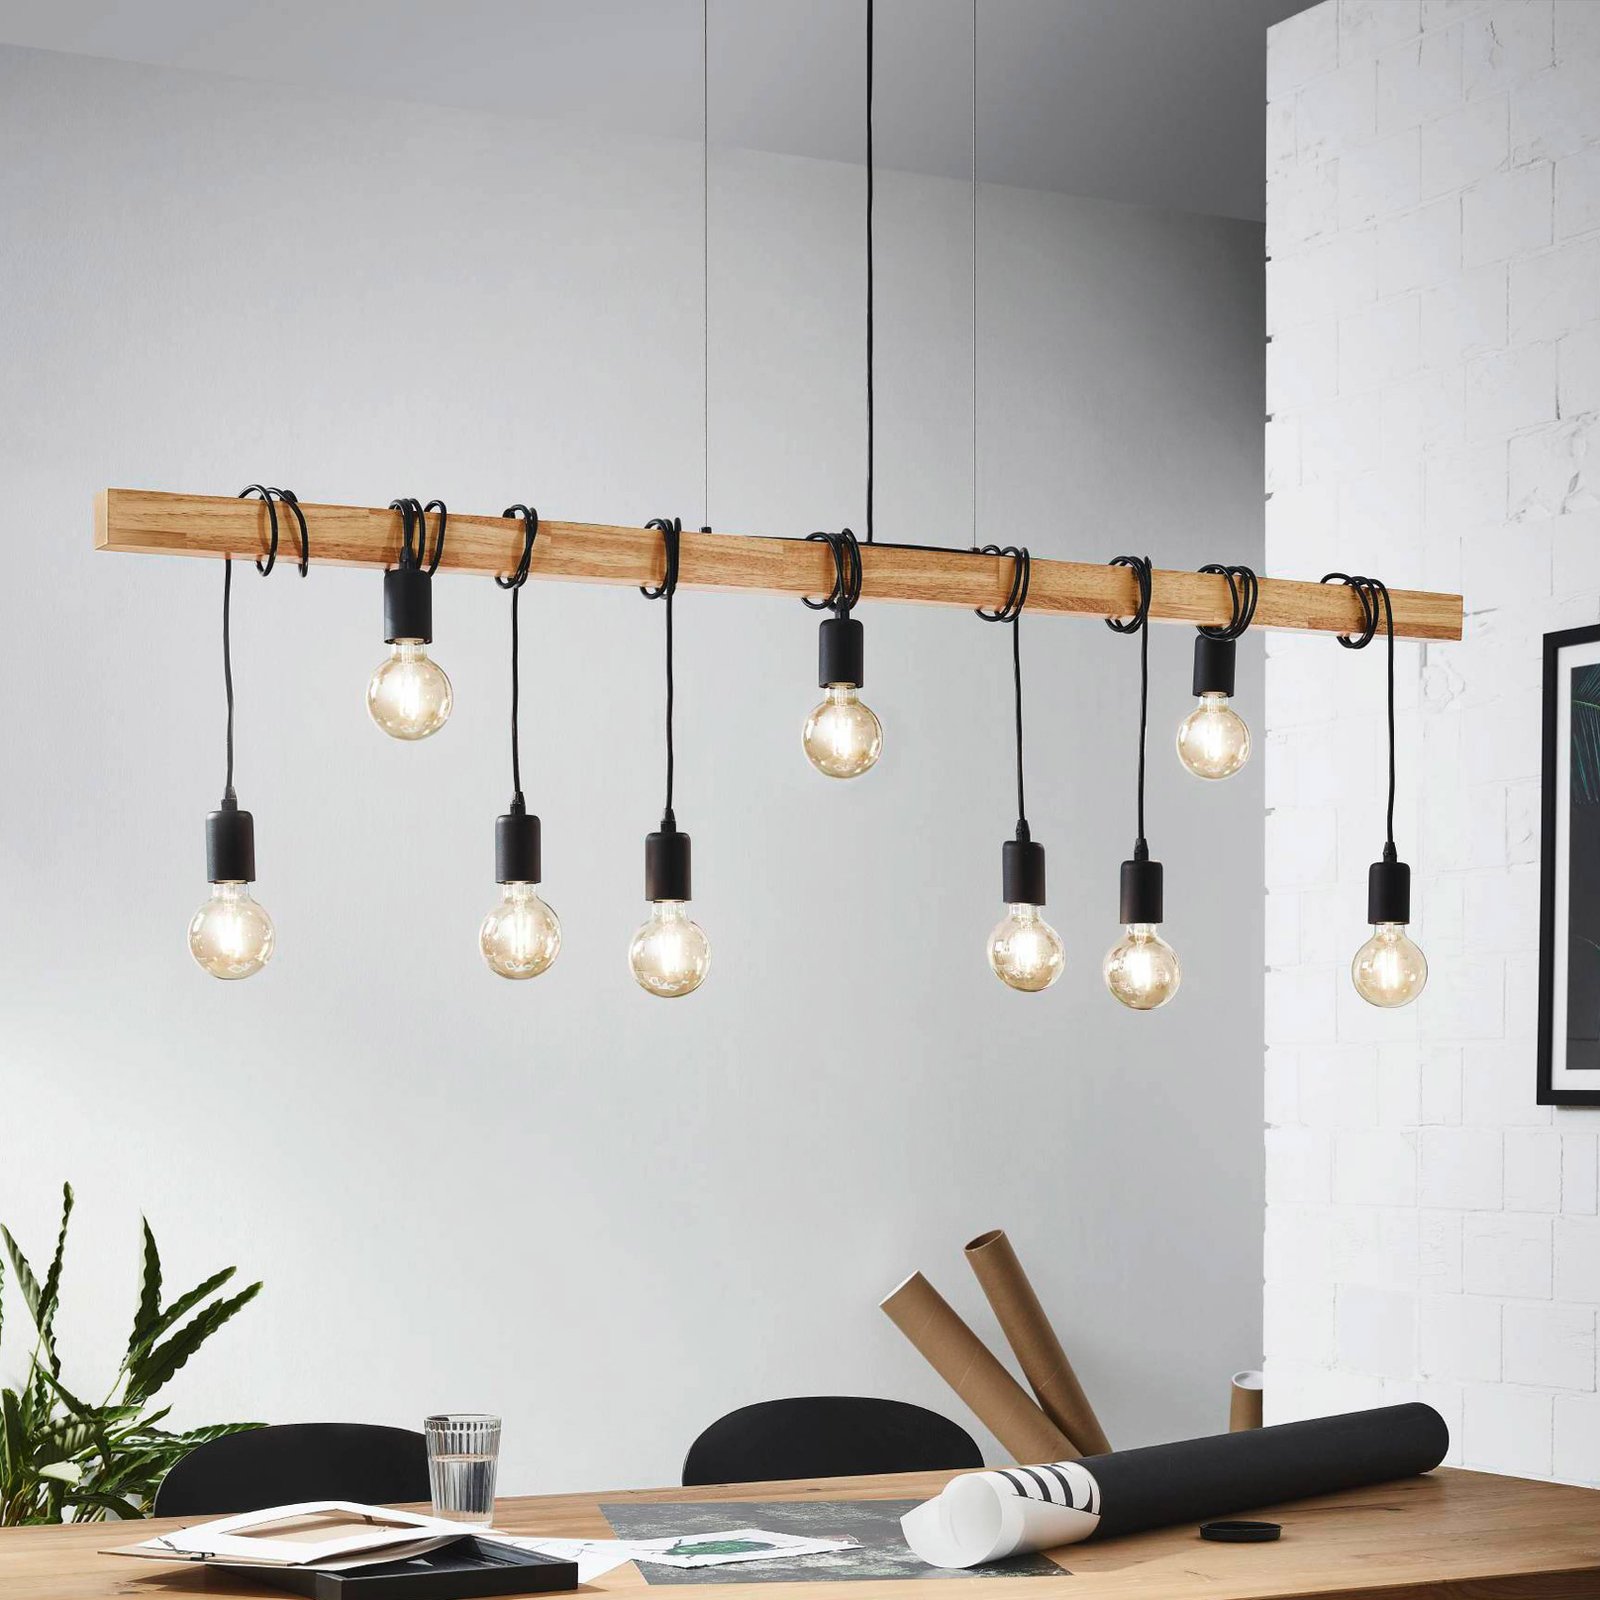 Townshend hanglamp met hout, 9-lamps